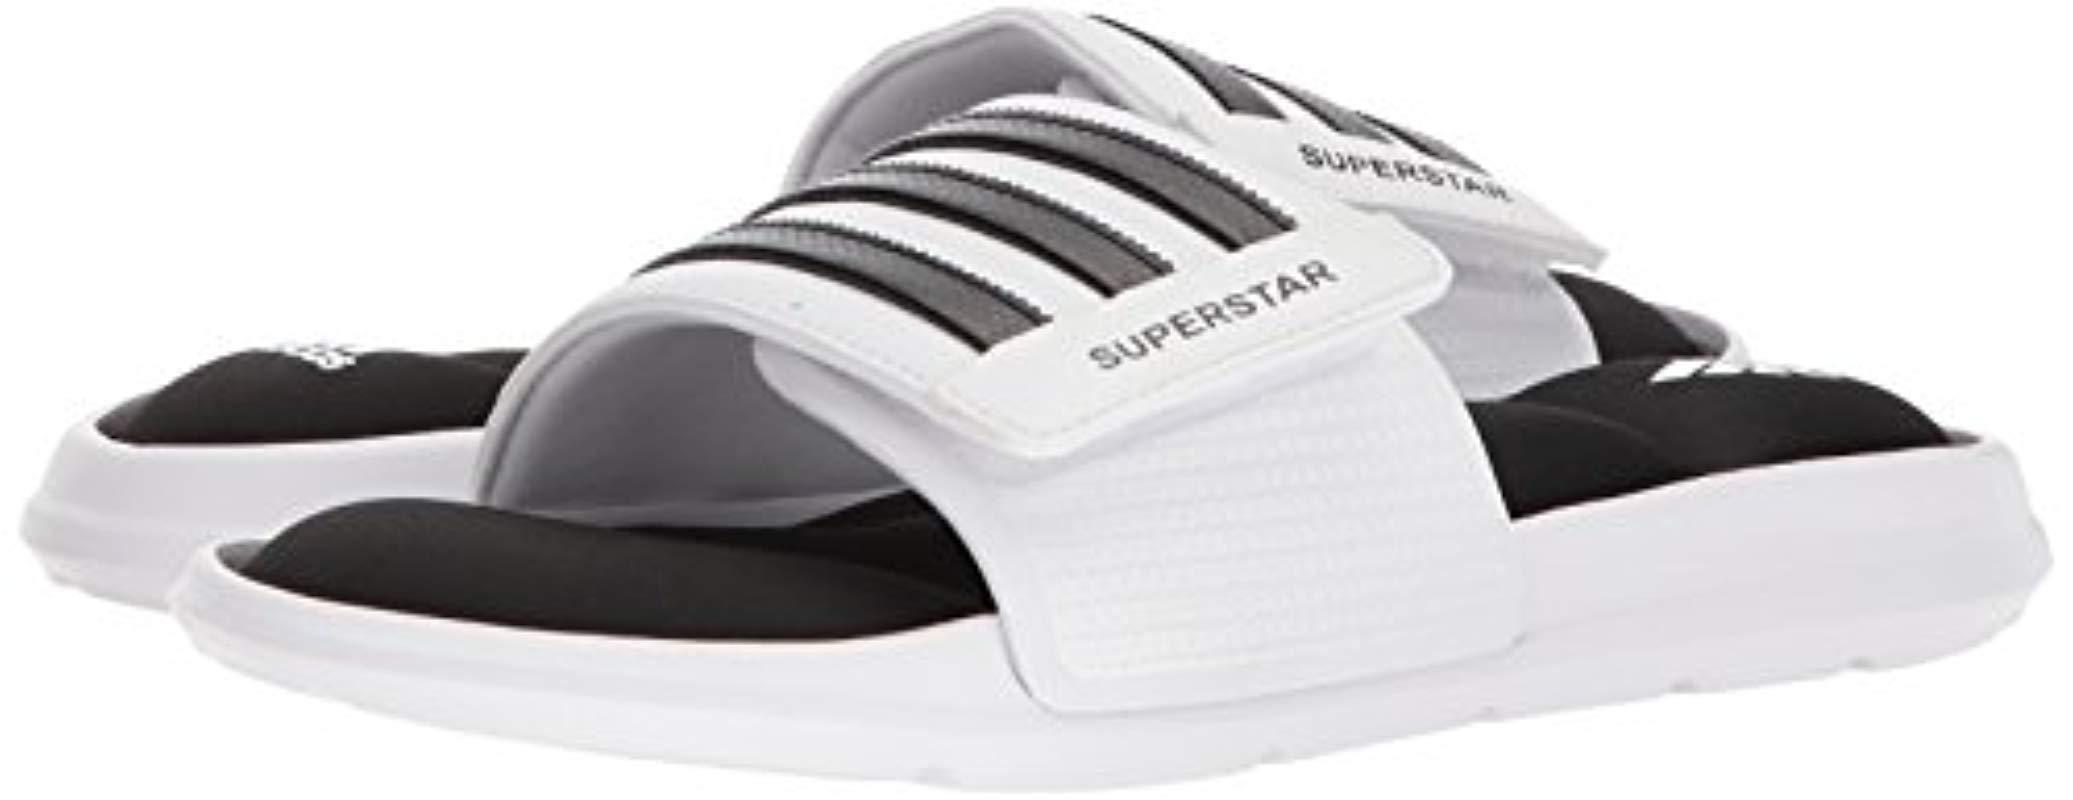 adidas superstar slide sandals